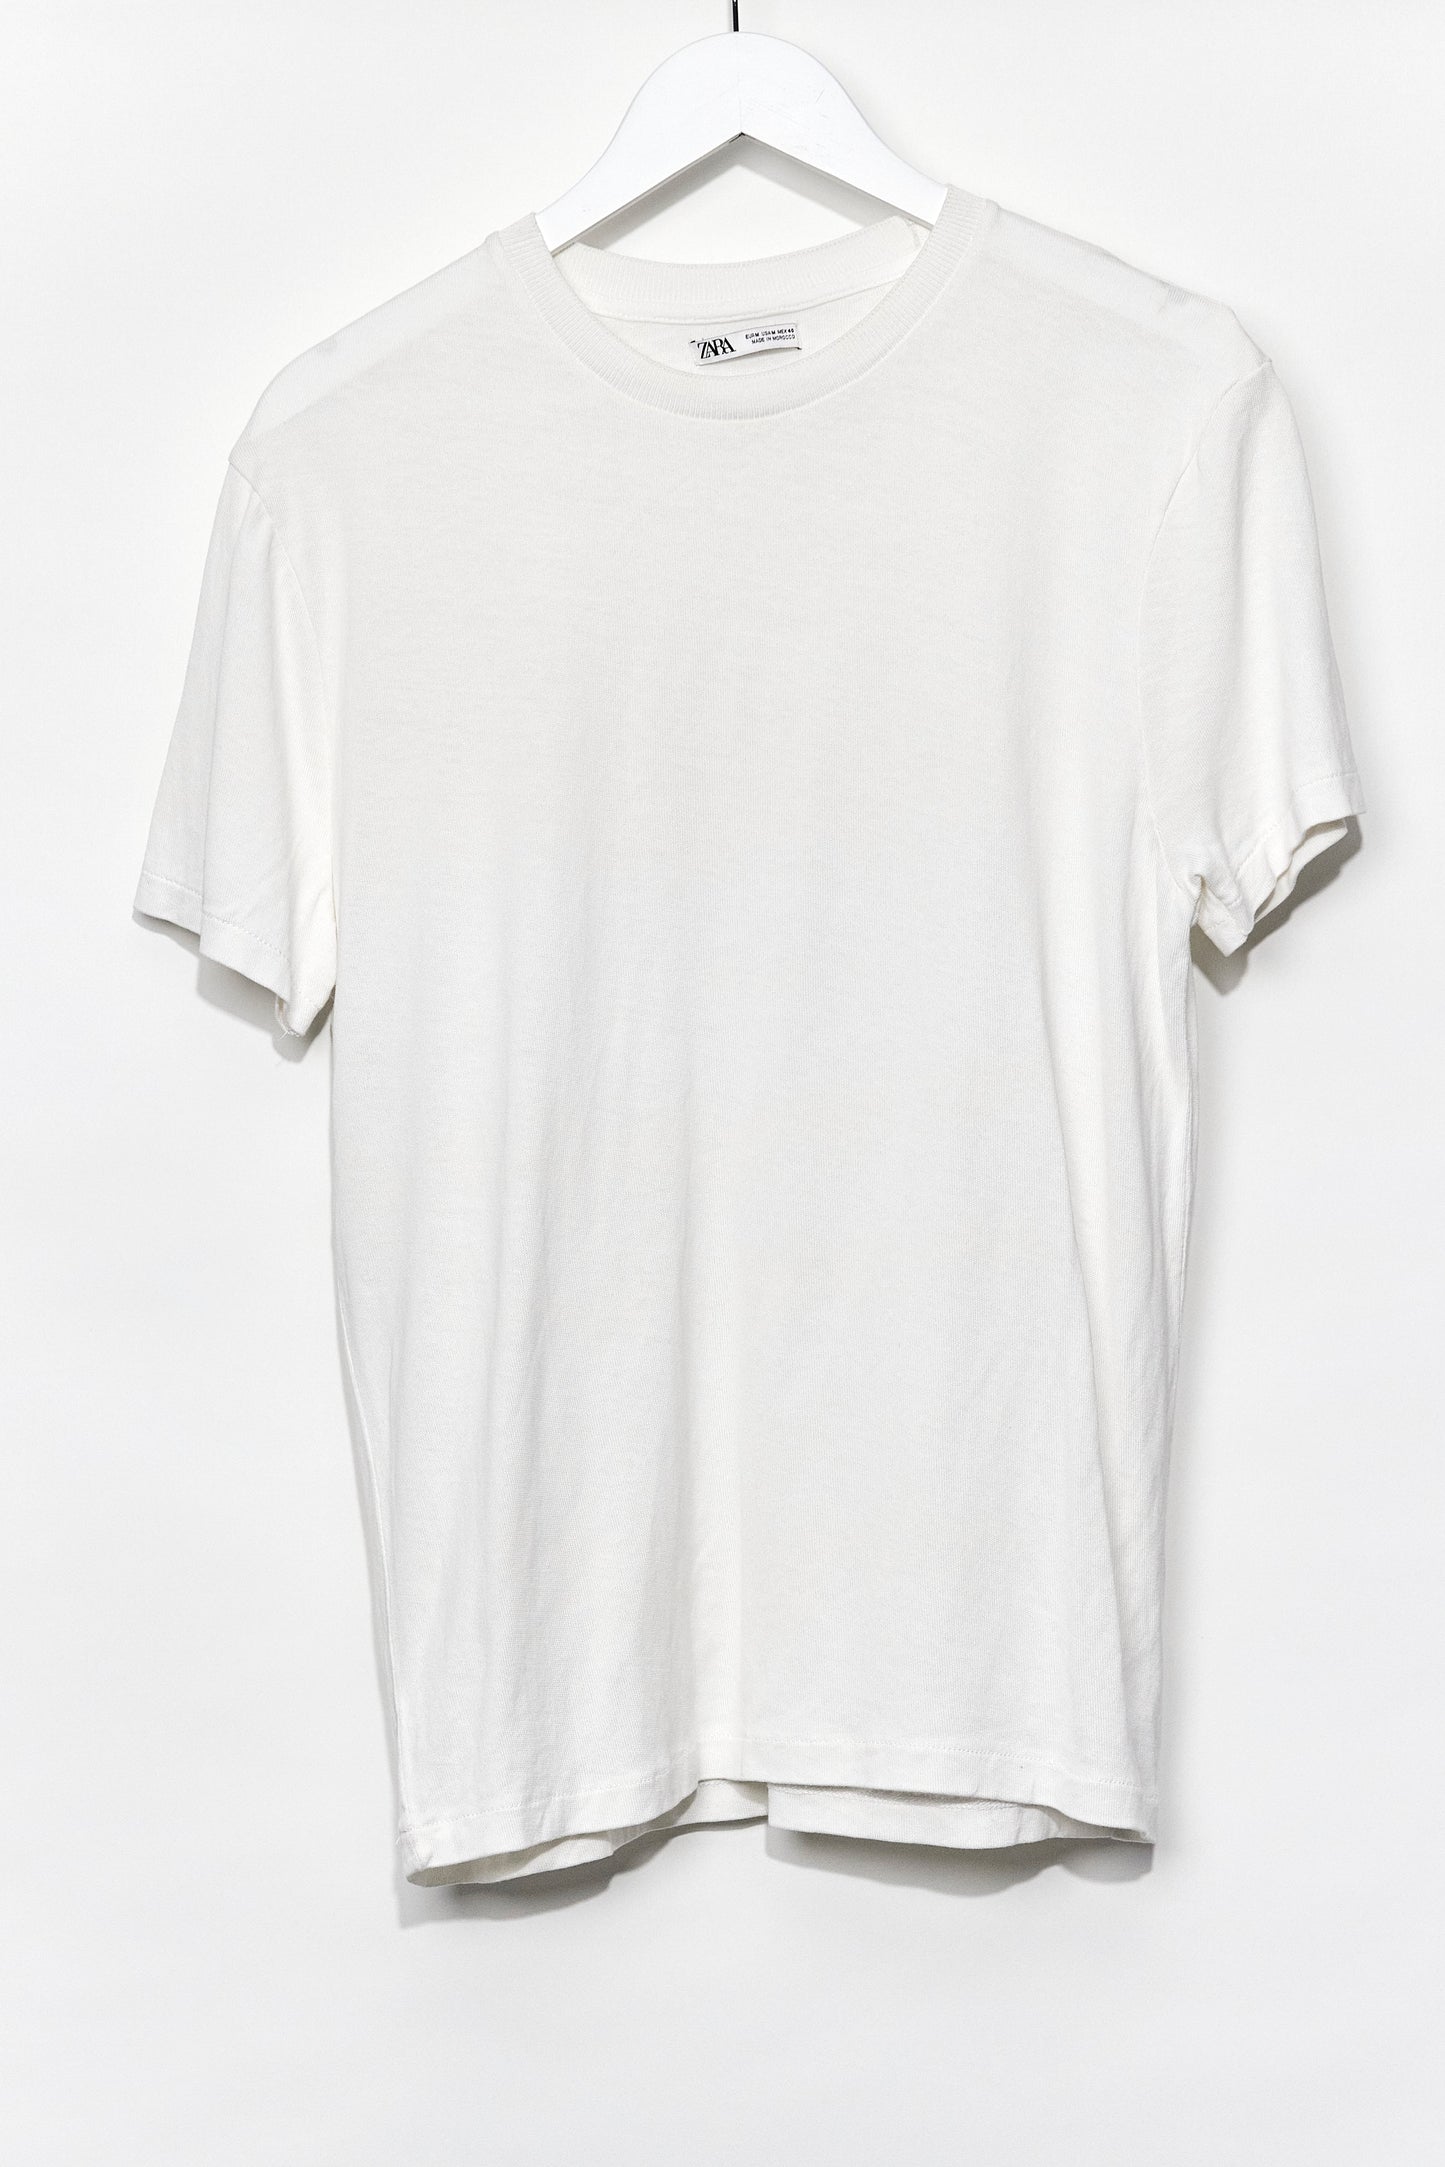 Mens Zara White Knitted T-shirt size Medium